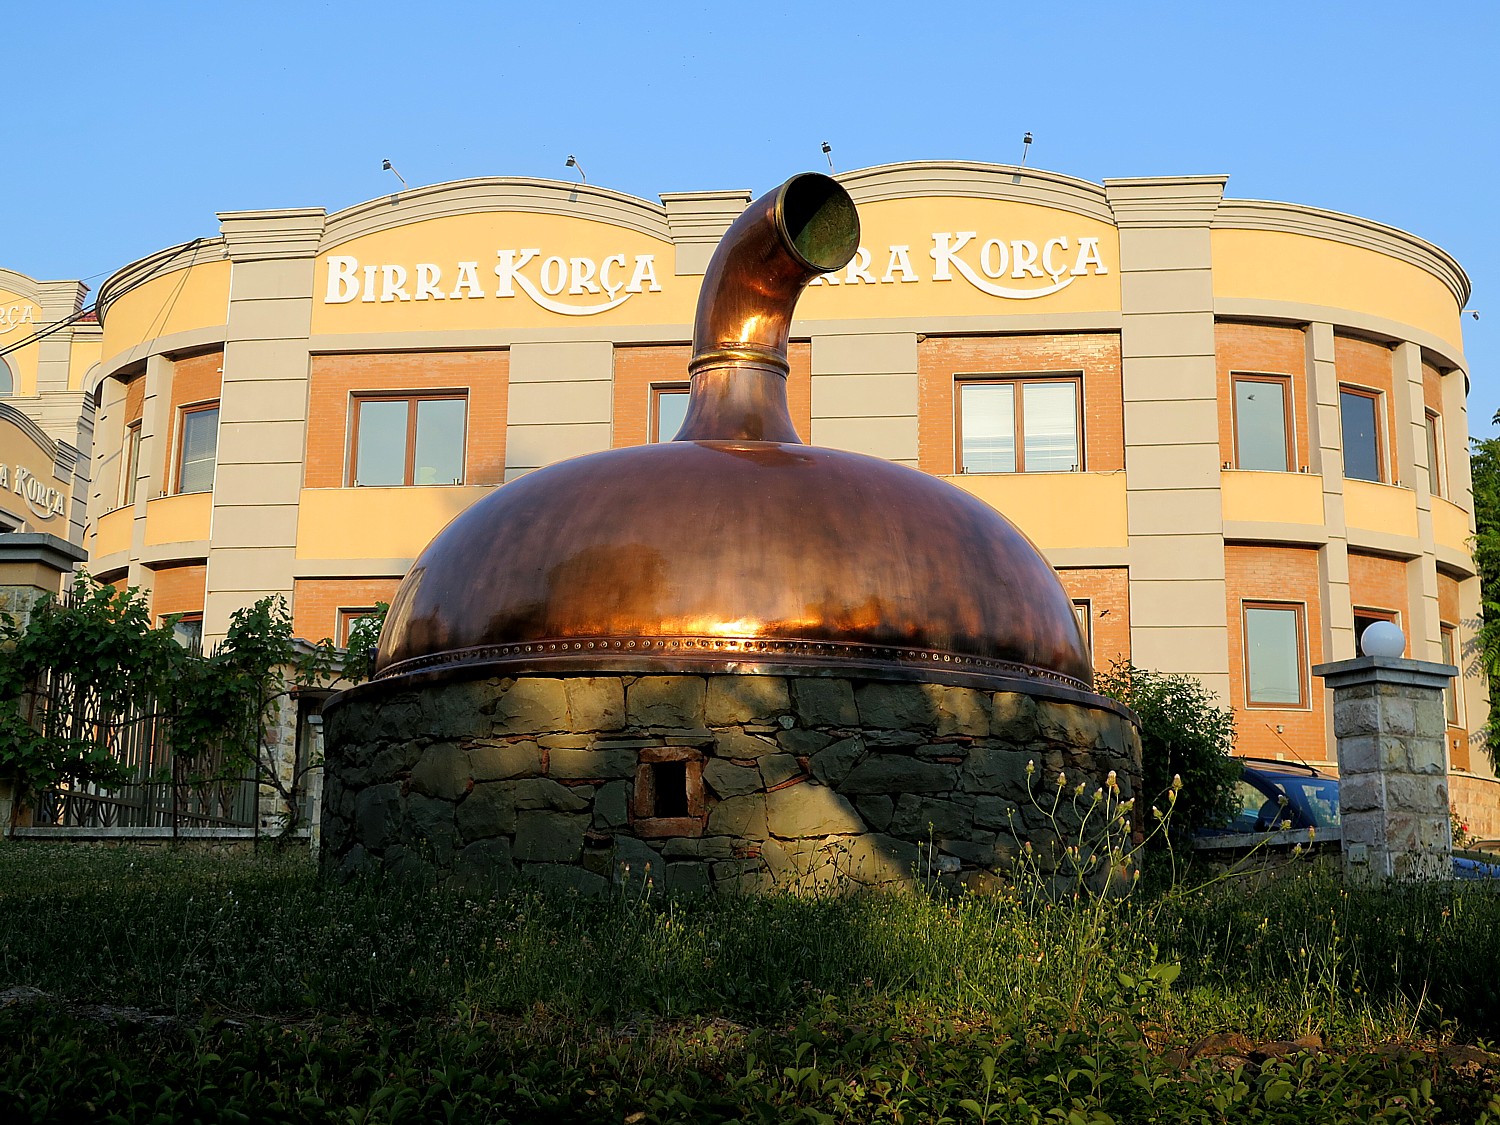 Korca Brewery © 2016 Karen Rubin/goingplacesfarandnear.com